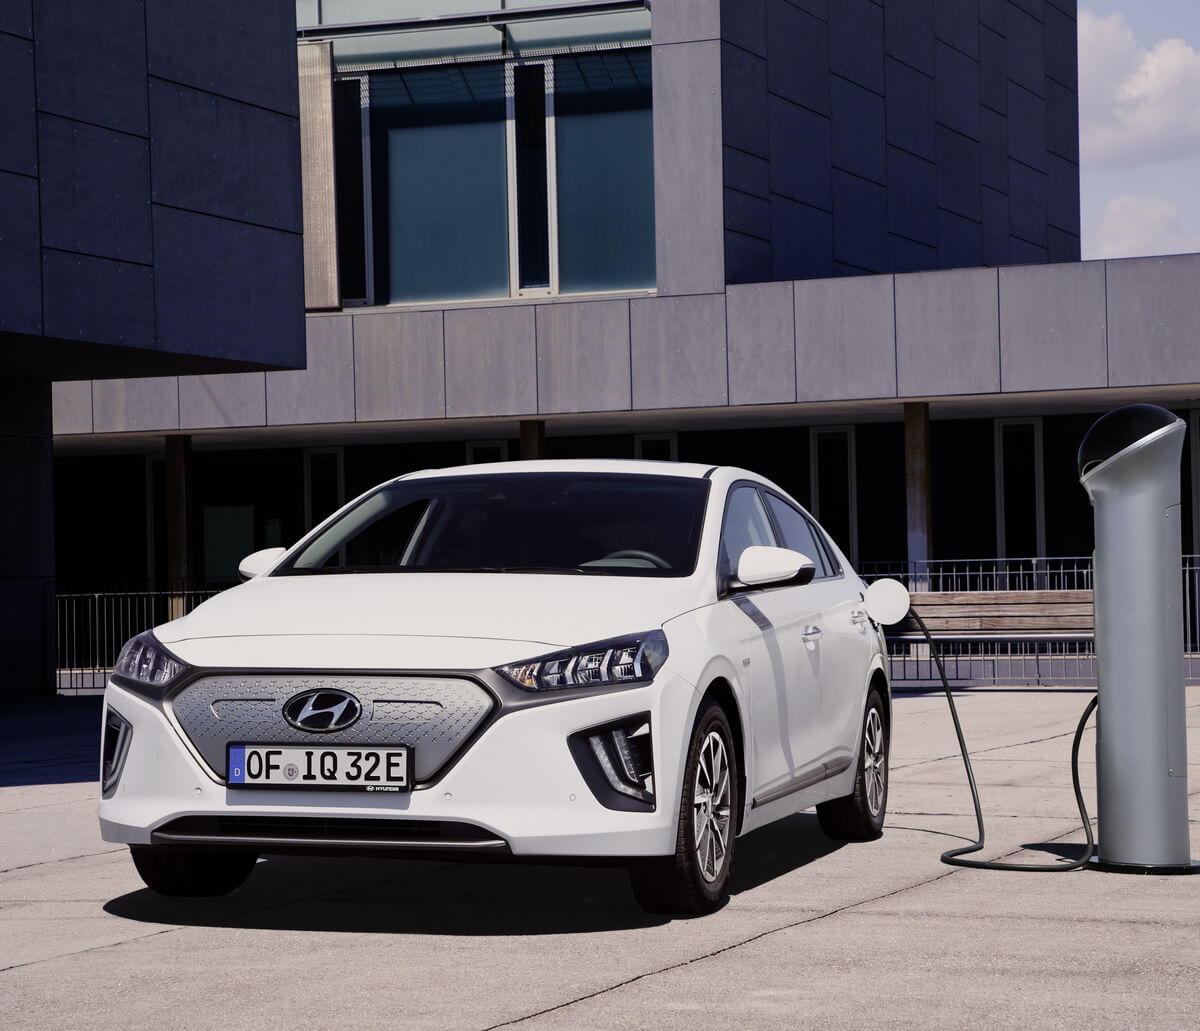 Correctie corruptie Ik geloof Hyundai IONIQ electric 38.3 kWh Battery Capacity – Electric Vehicle Specs